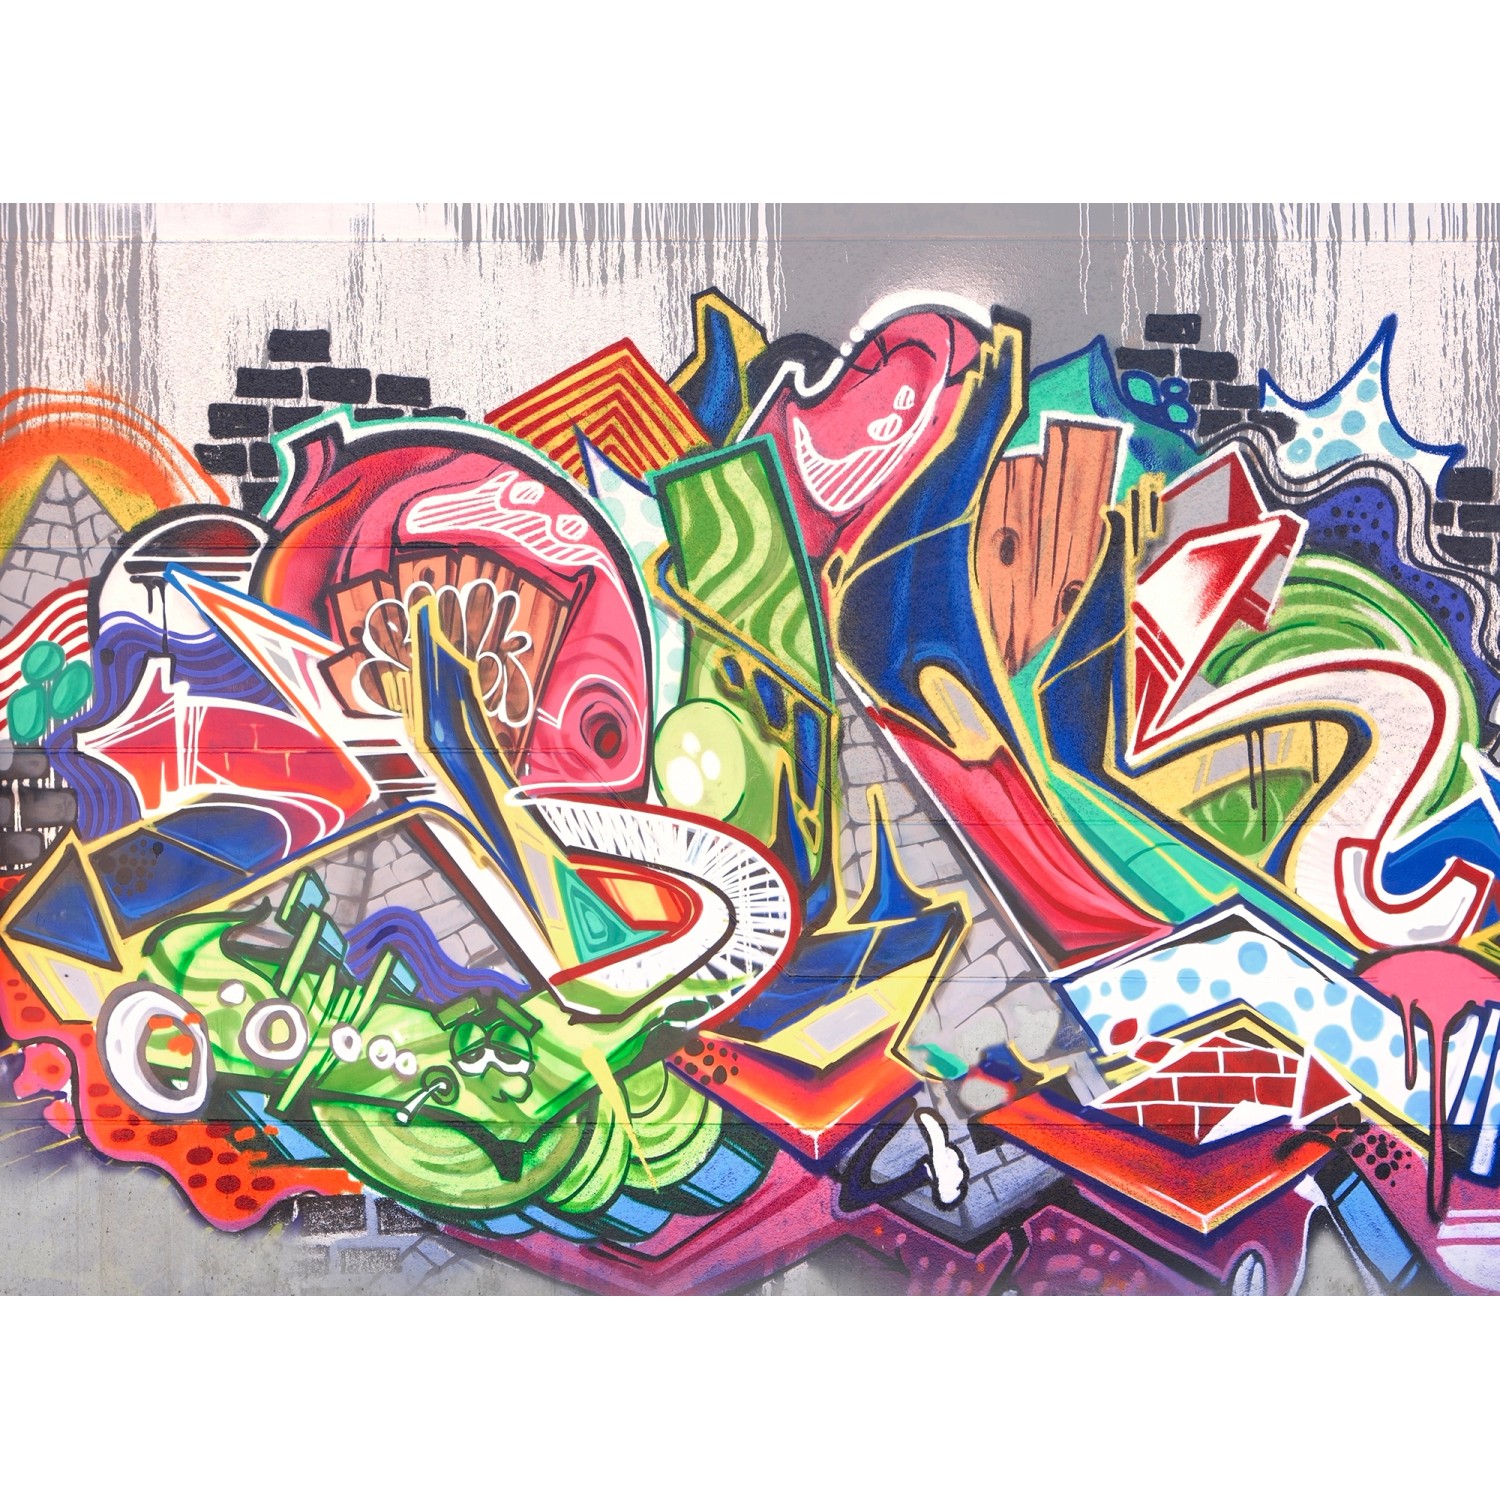 Fototapete Vliestapete Graffiti Bunt Grau Grün Rot Orange Blau 3,50x2,55 m FSC® von -